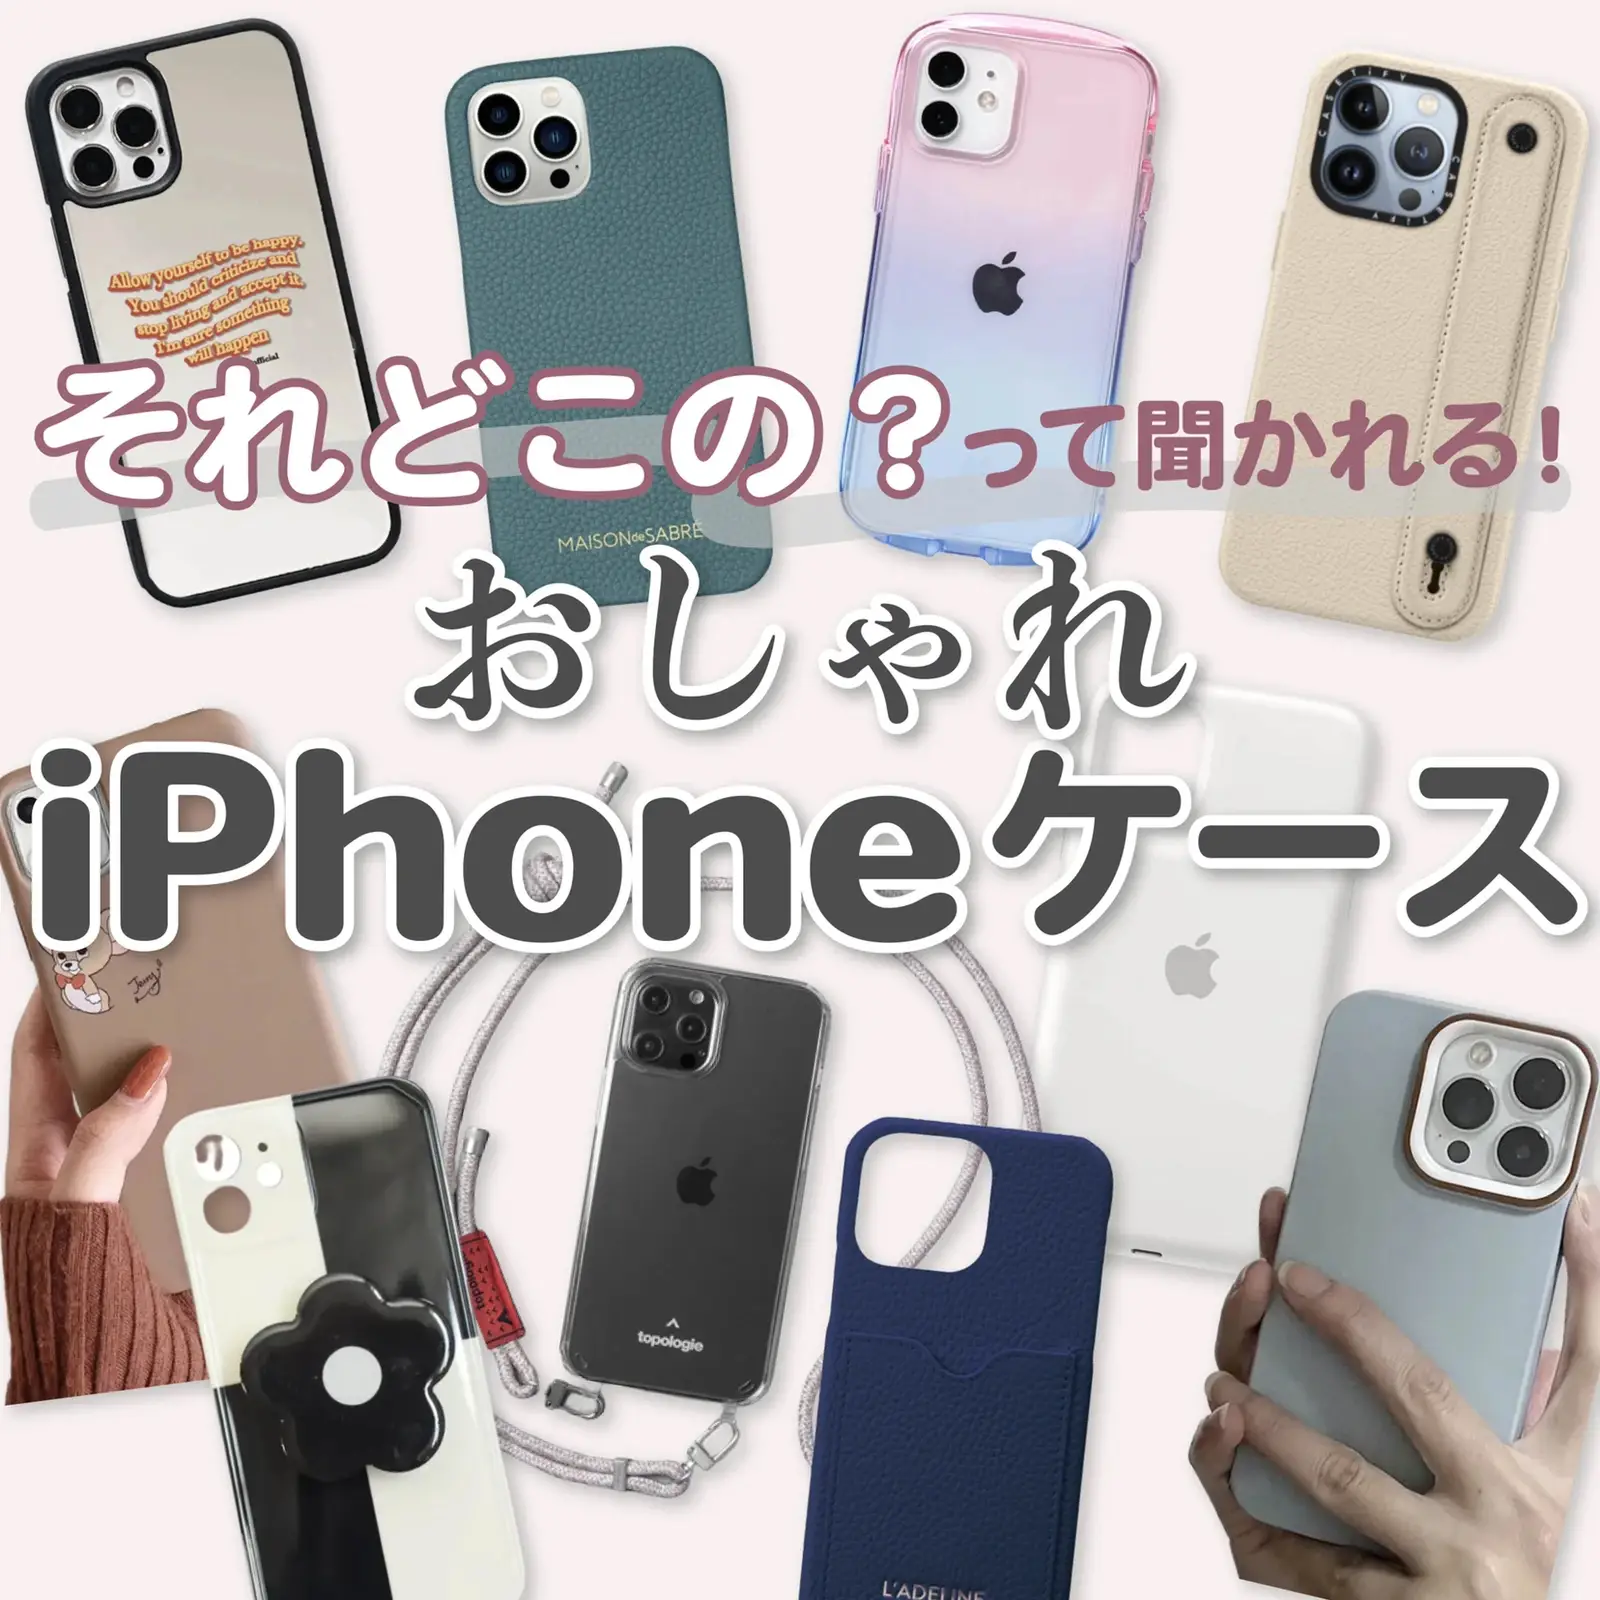 Iphoneケース - Lemon8検索